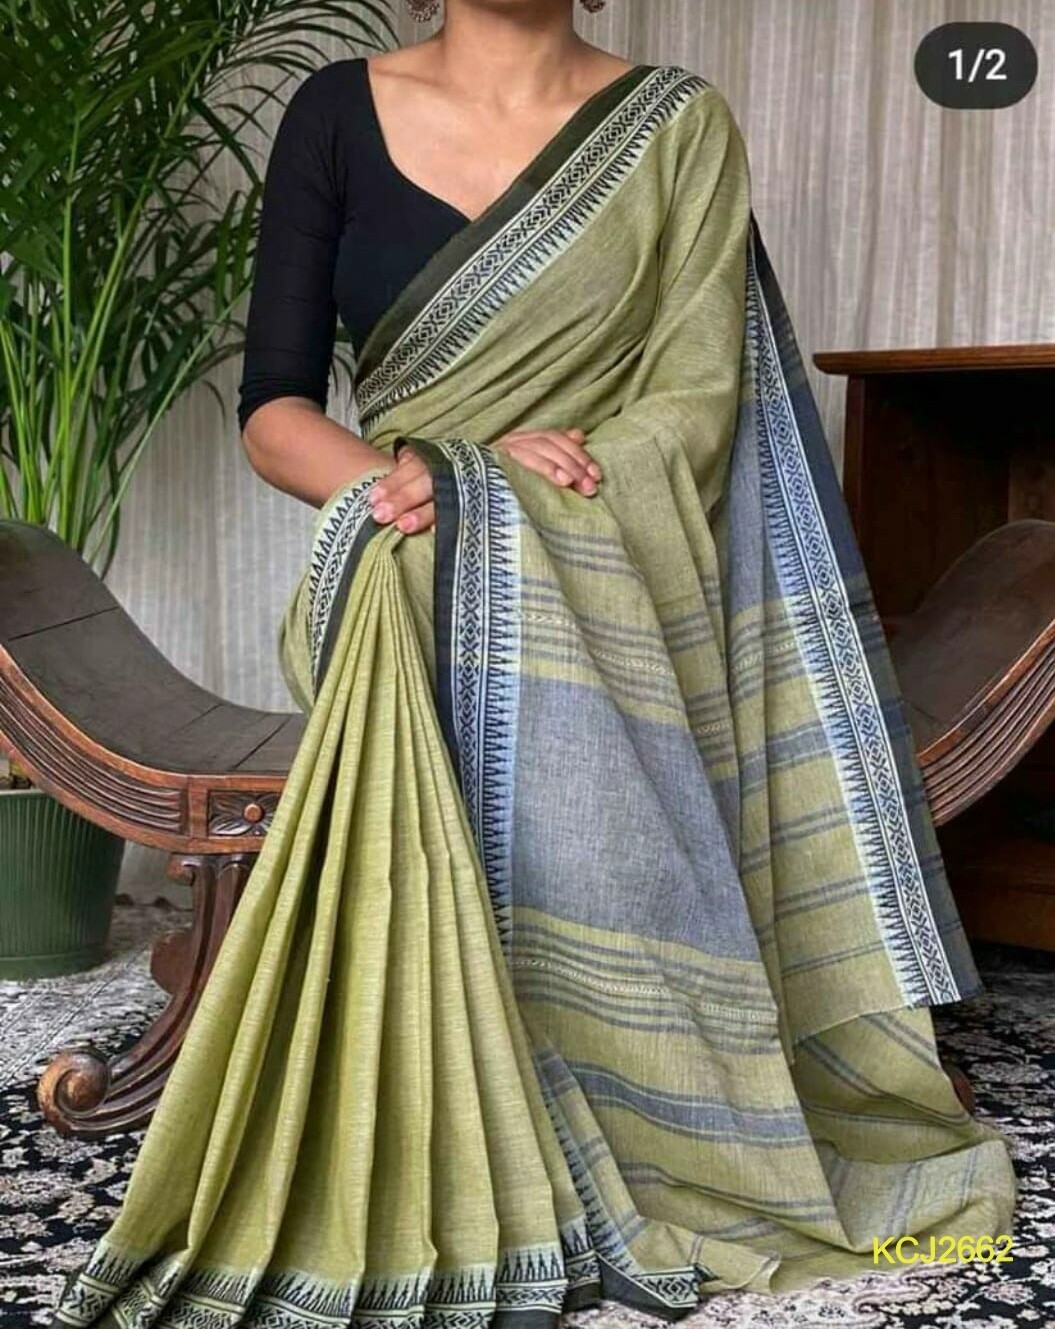 Handloom Cotton Khadi saree with jacquard weaving